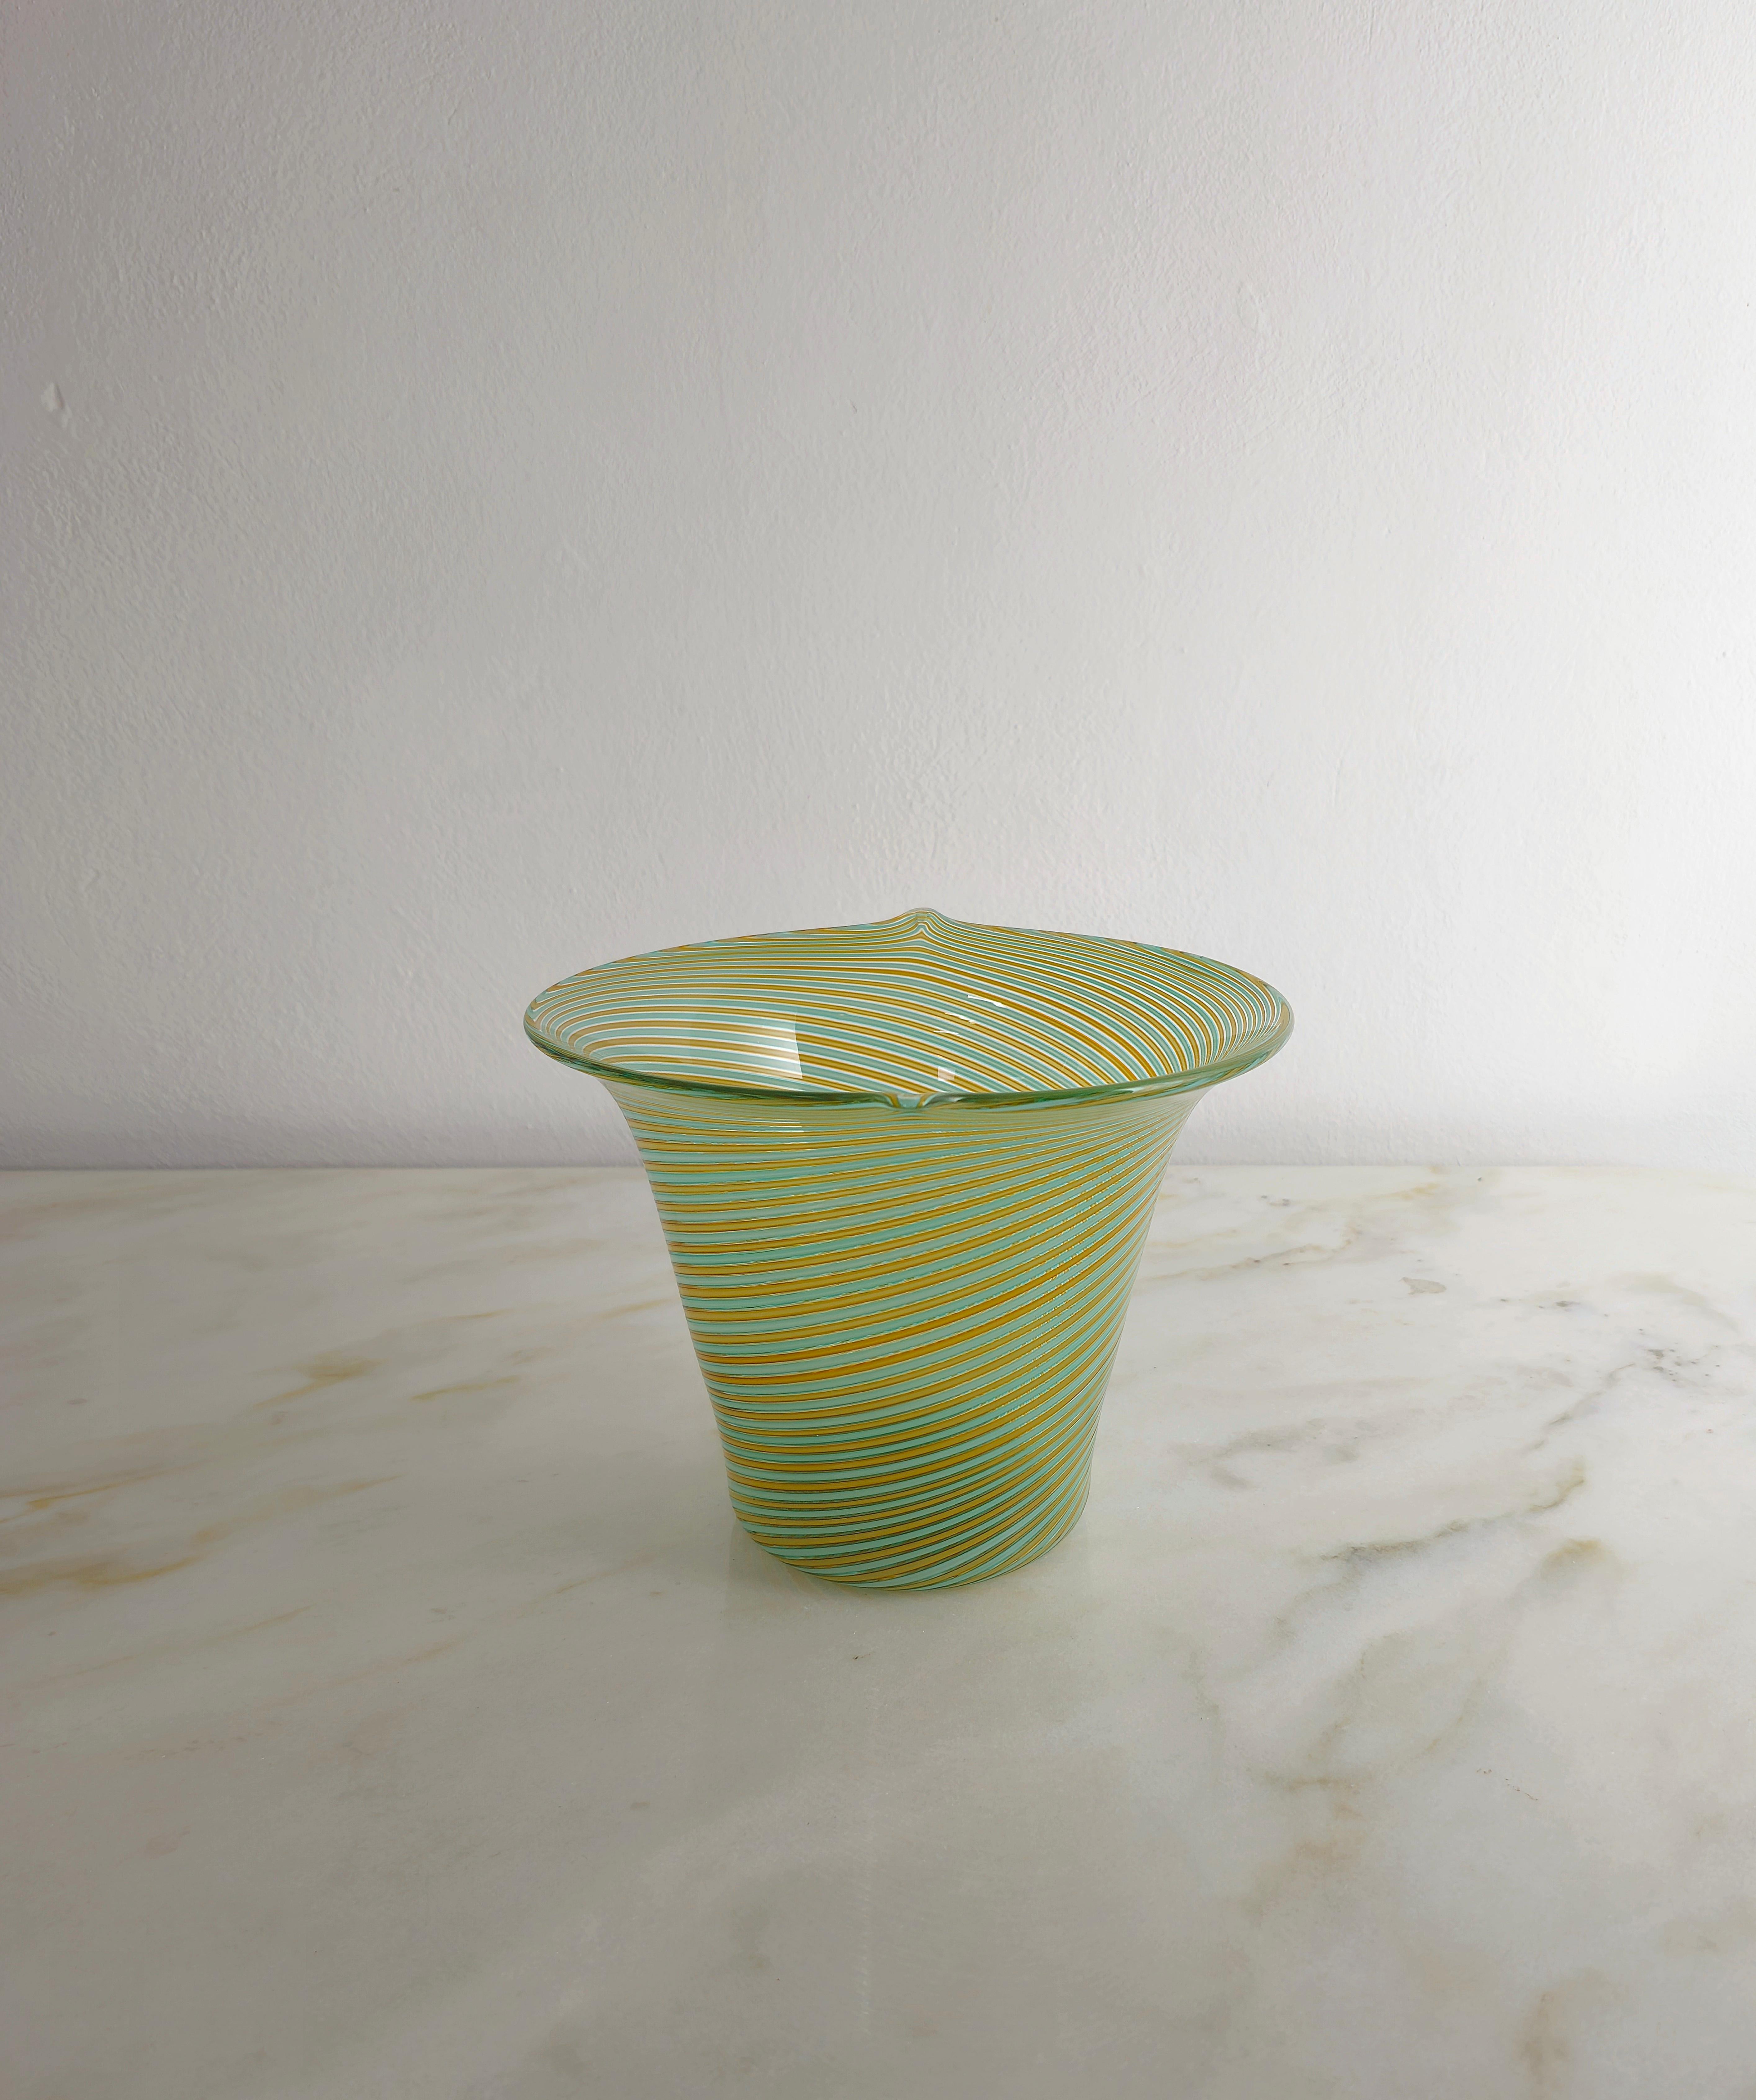 Vase Decorative Object Cenedese Murano Glass Midcentury Italian Design 1960s For Sale 1